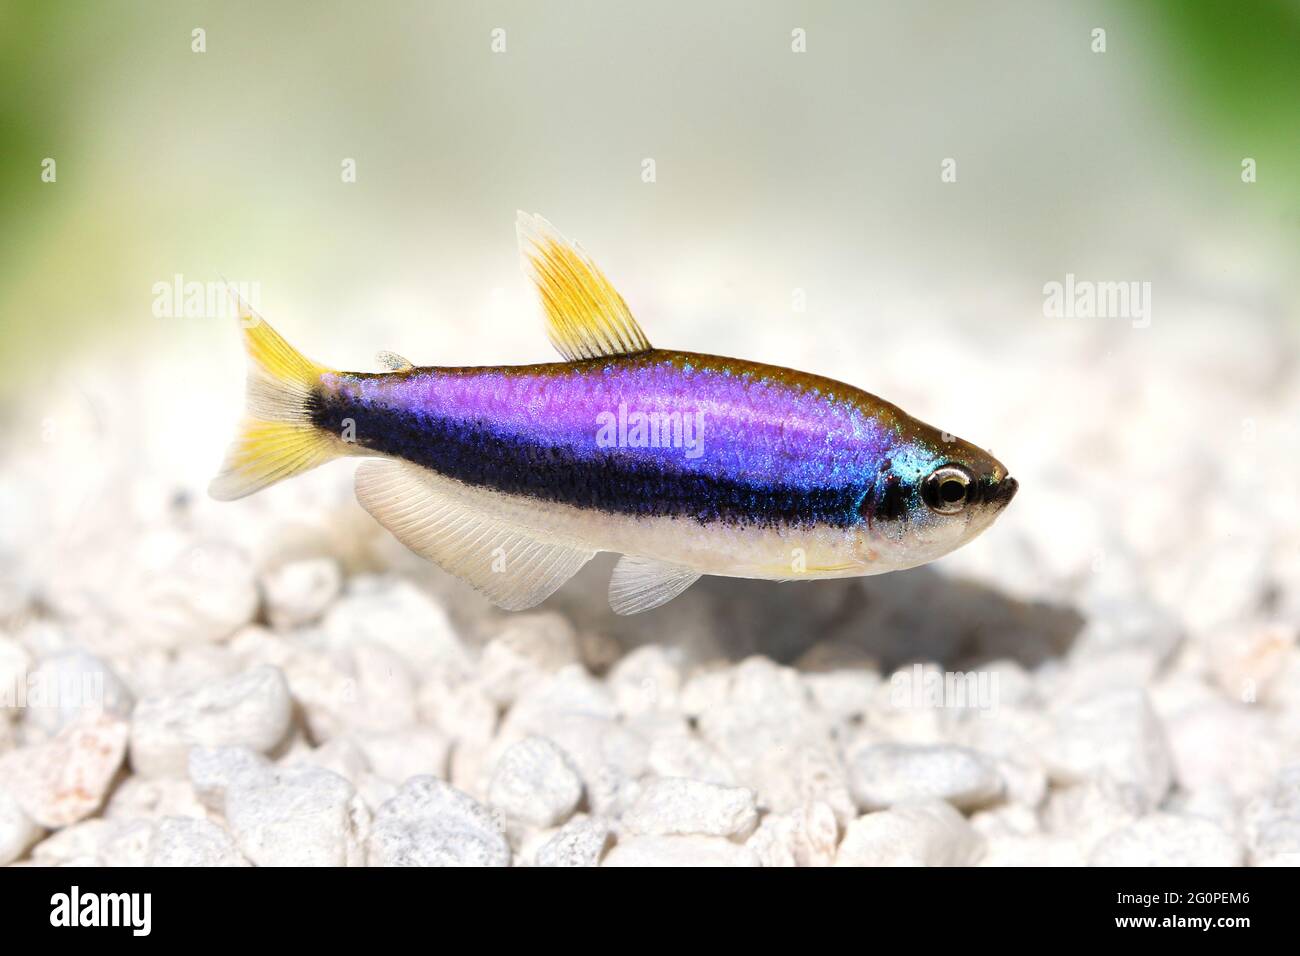 Blue Emperor Tetra Inpaichthys kerri tropical aquarium fish isolated Stock Photo